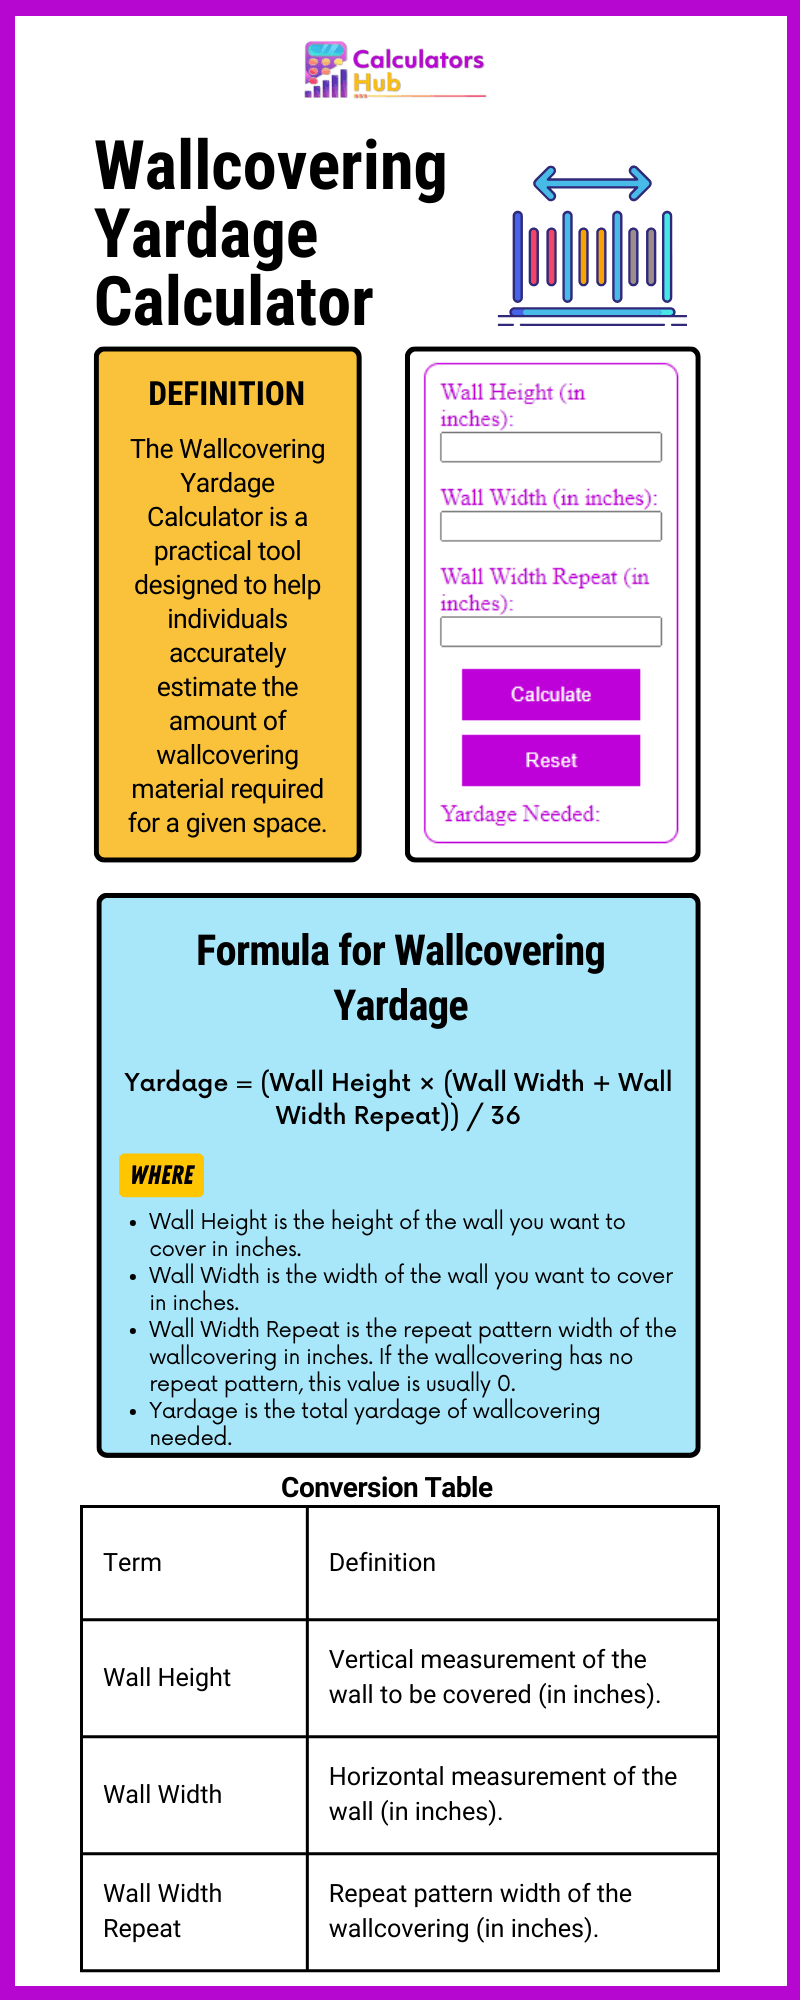 Wallcovering Yardage Calculator